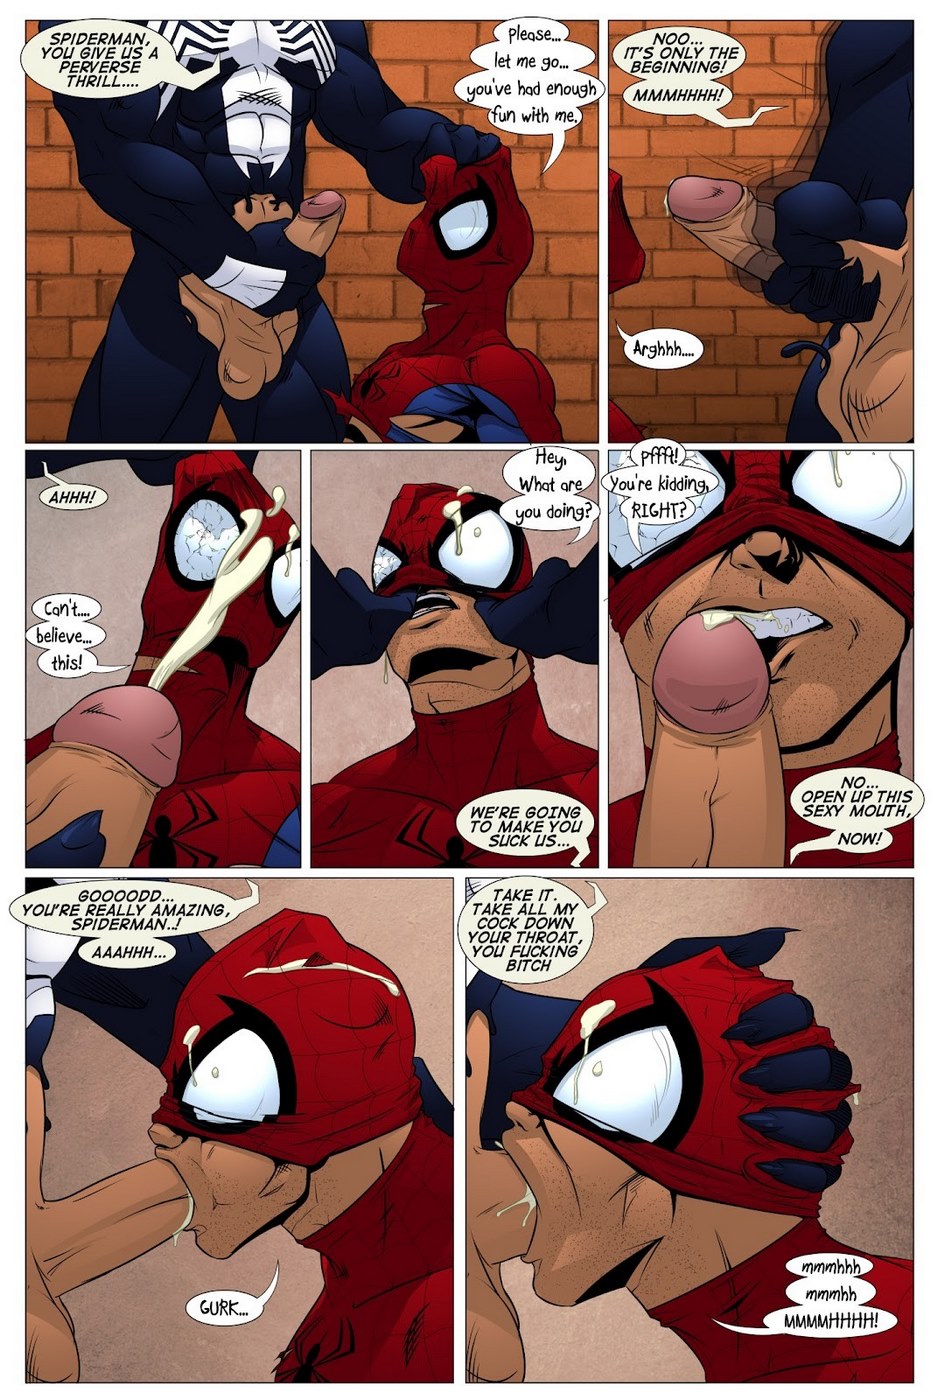 Venom and spiderman gay porn comic